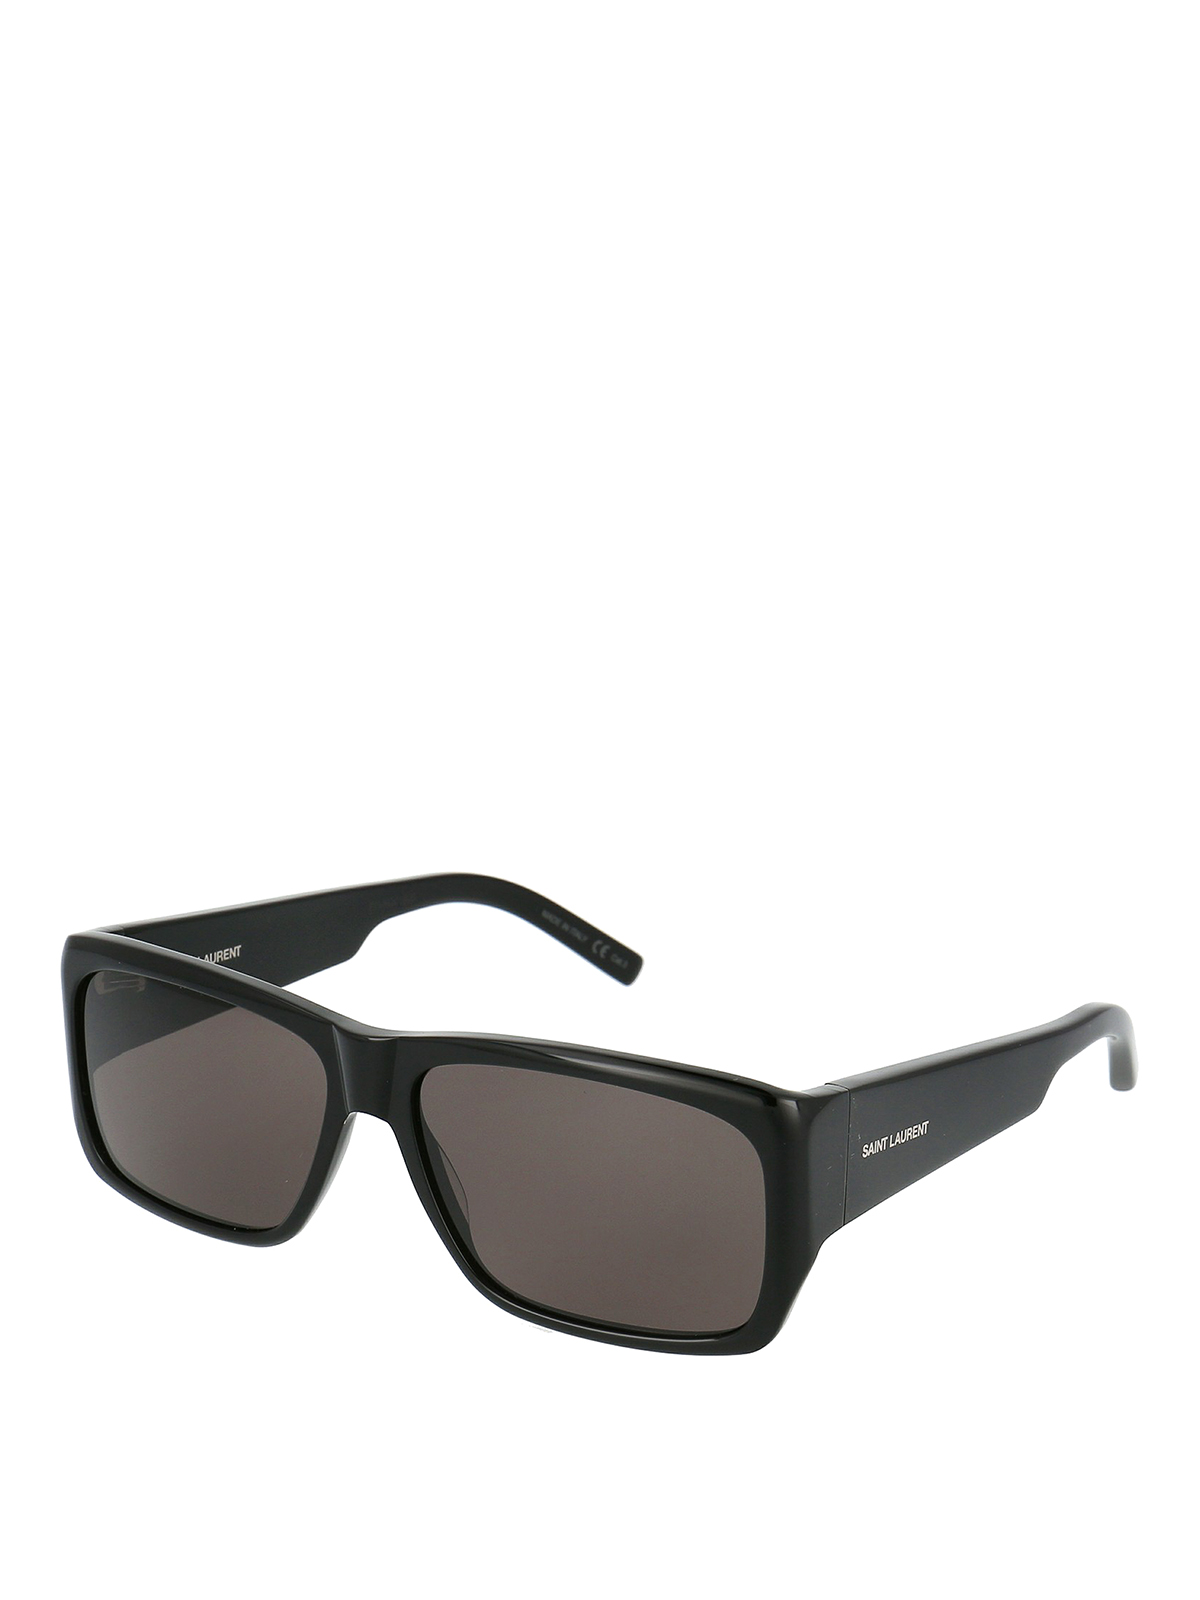 Sunglasses Saint Laurent - SL366 Lenny rectangular sunglasses